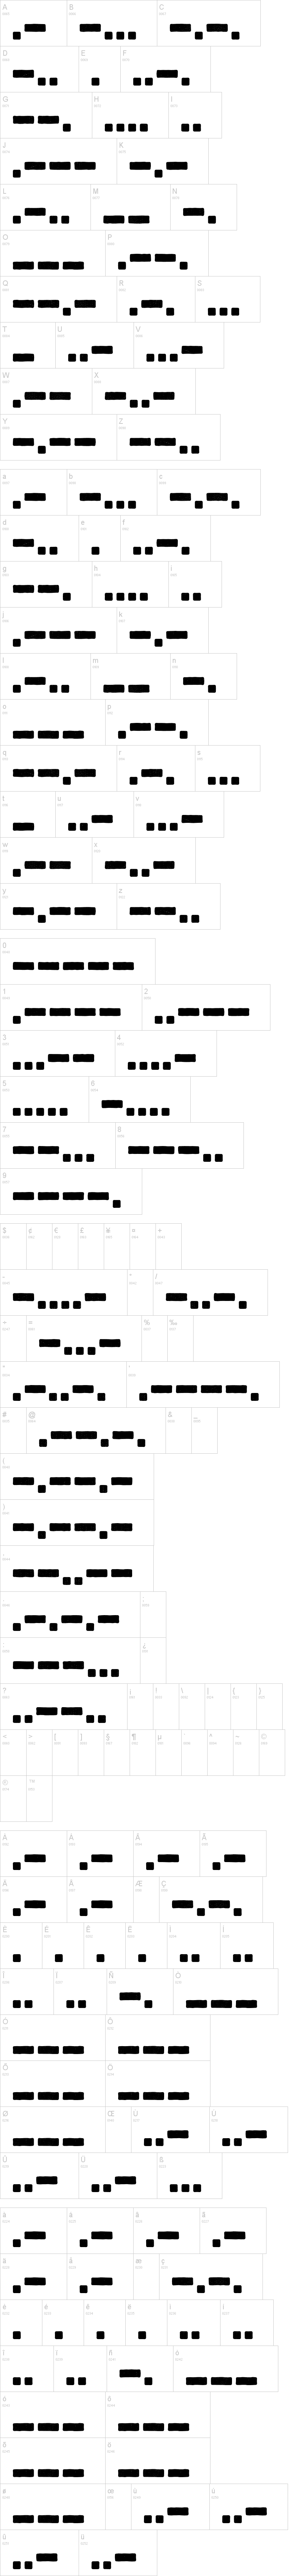 Bootcamp Morsecode